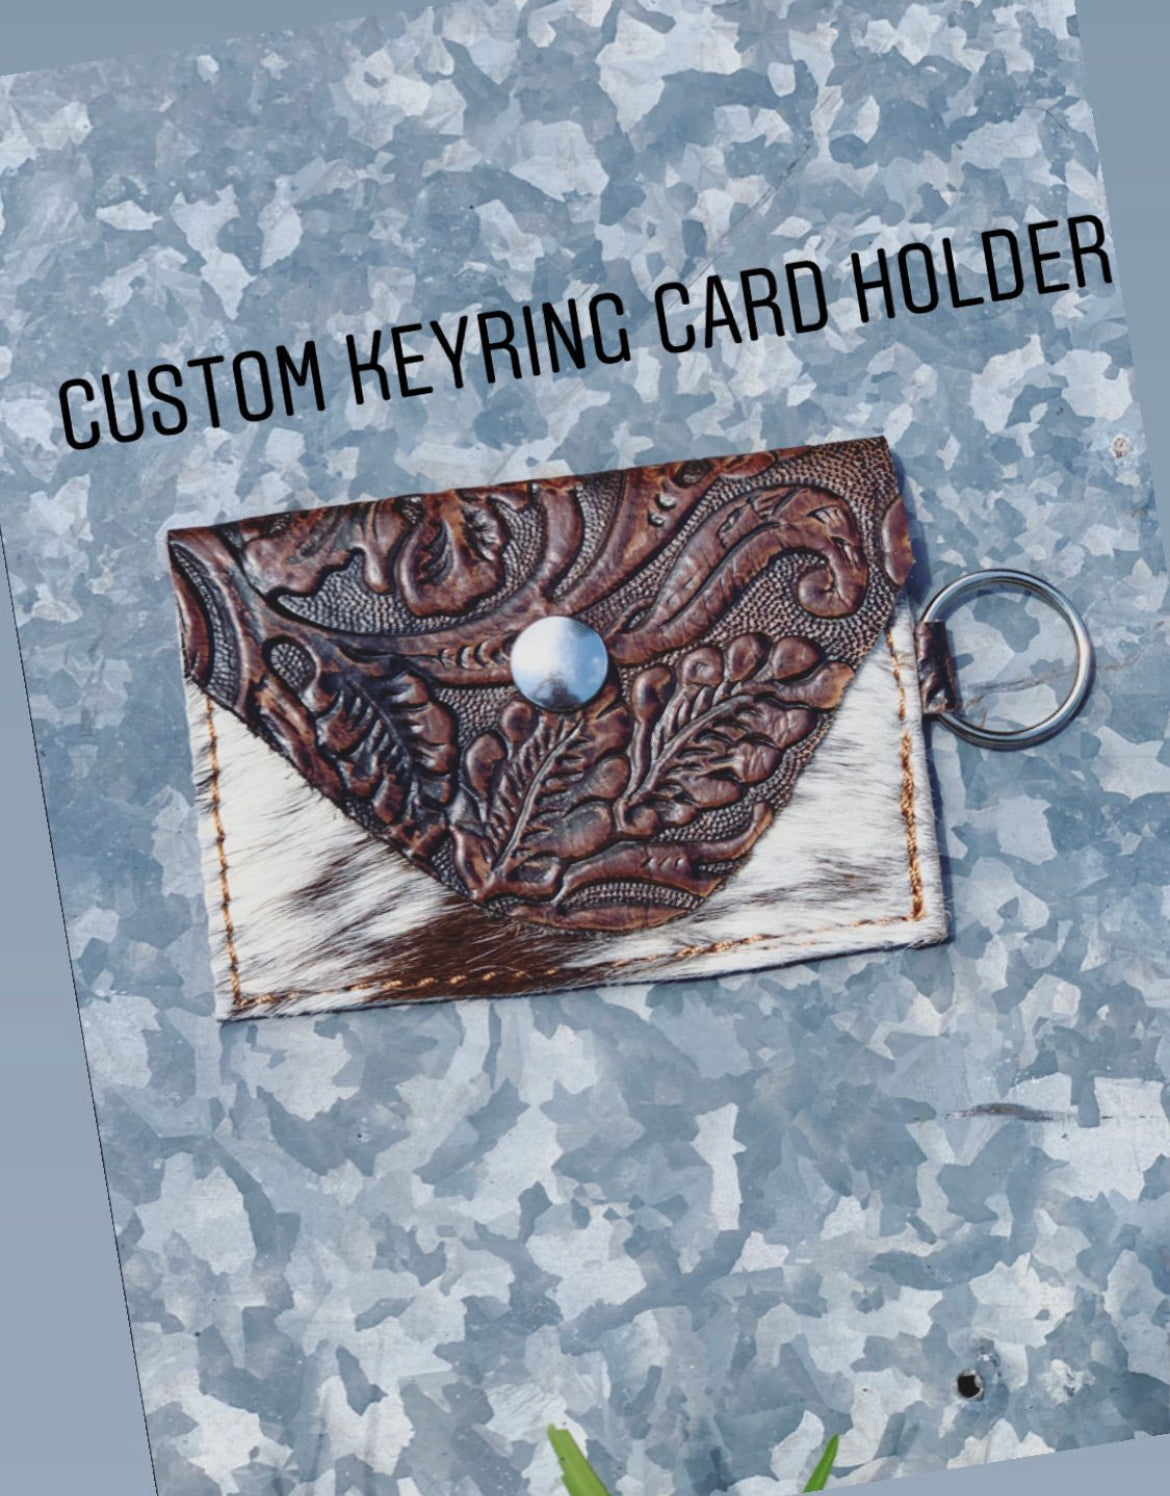 Custom Keyring Card Holder